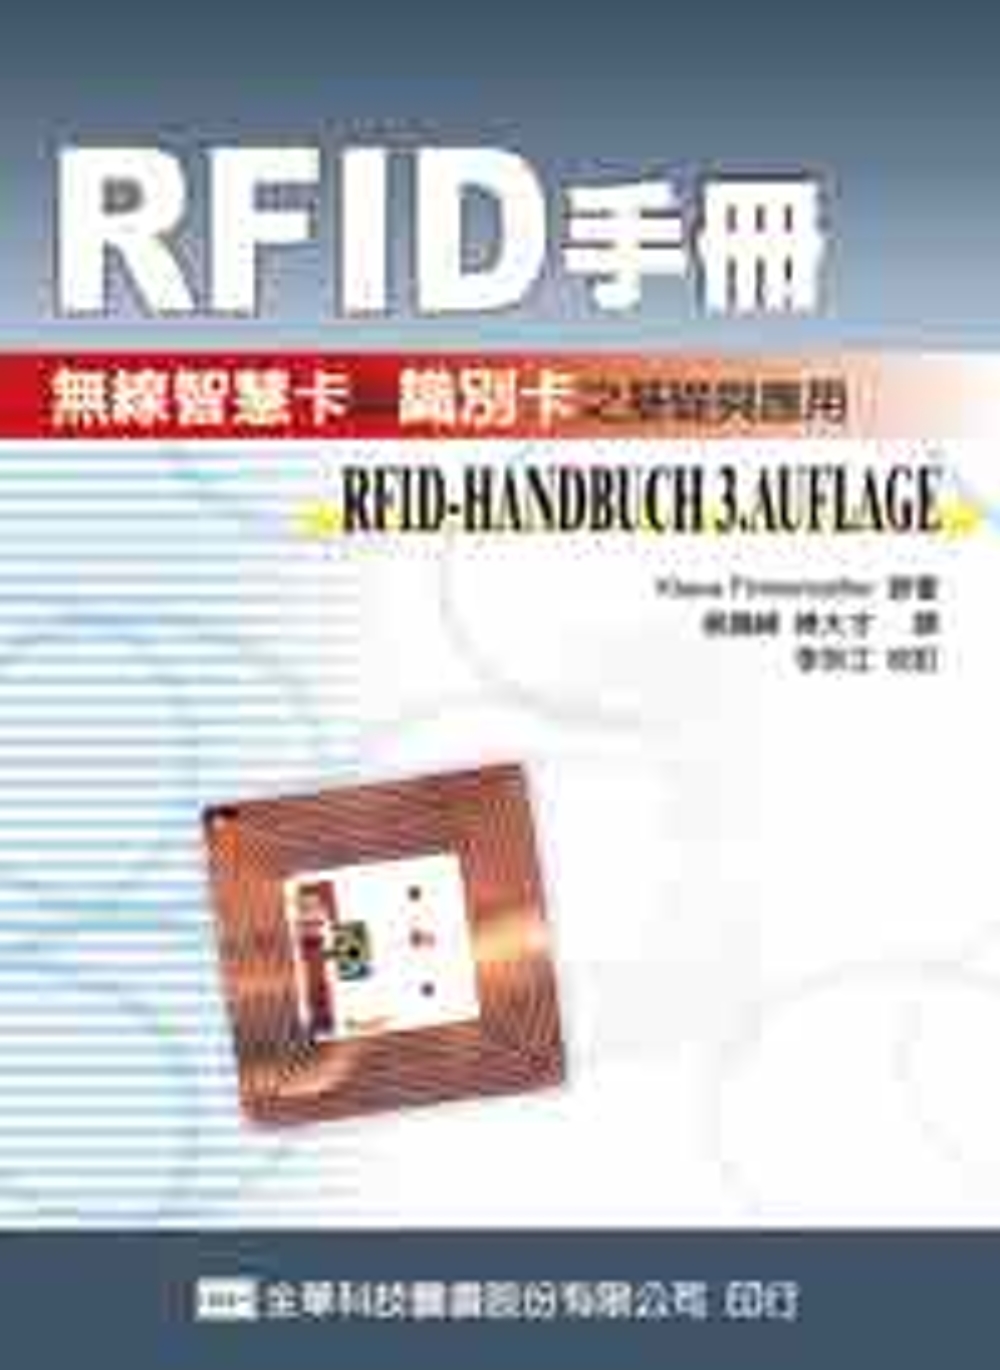 RFID手冊－無線智慧卡與識別卡之基礎與應用